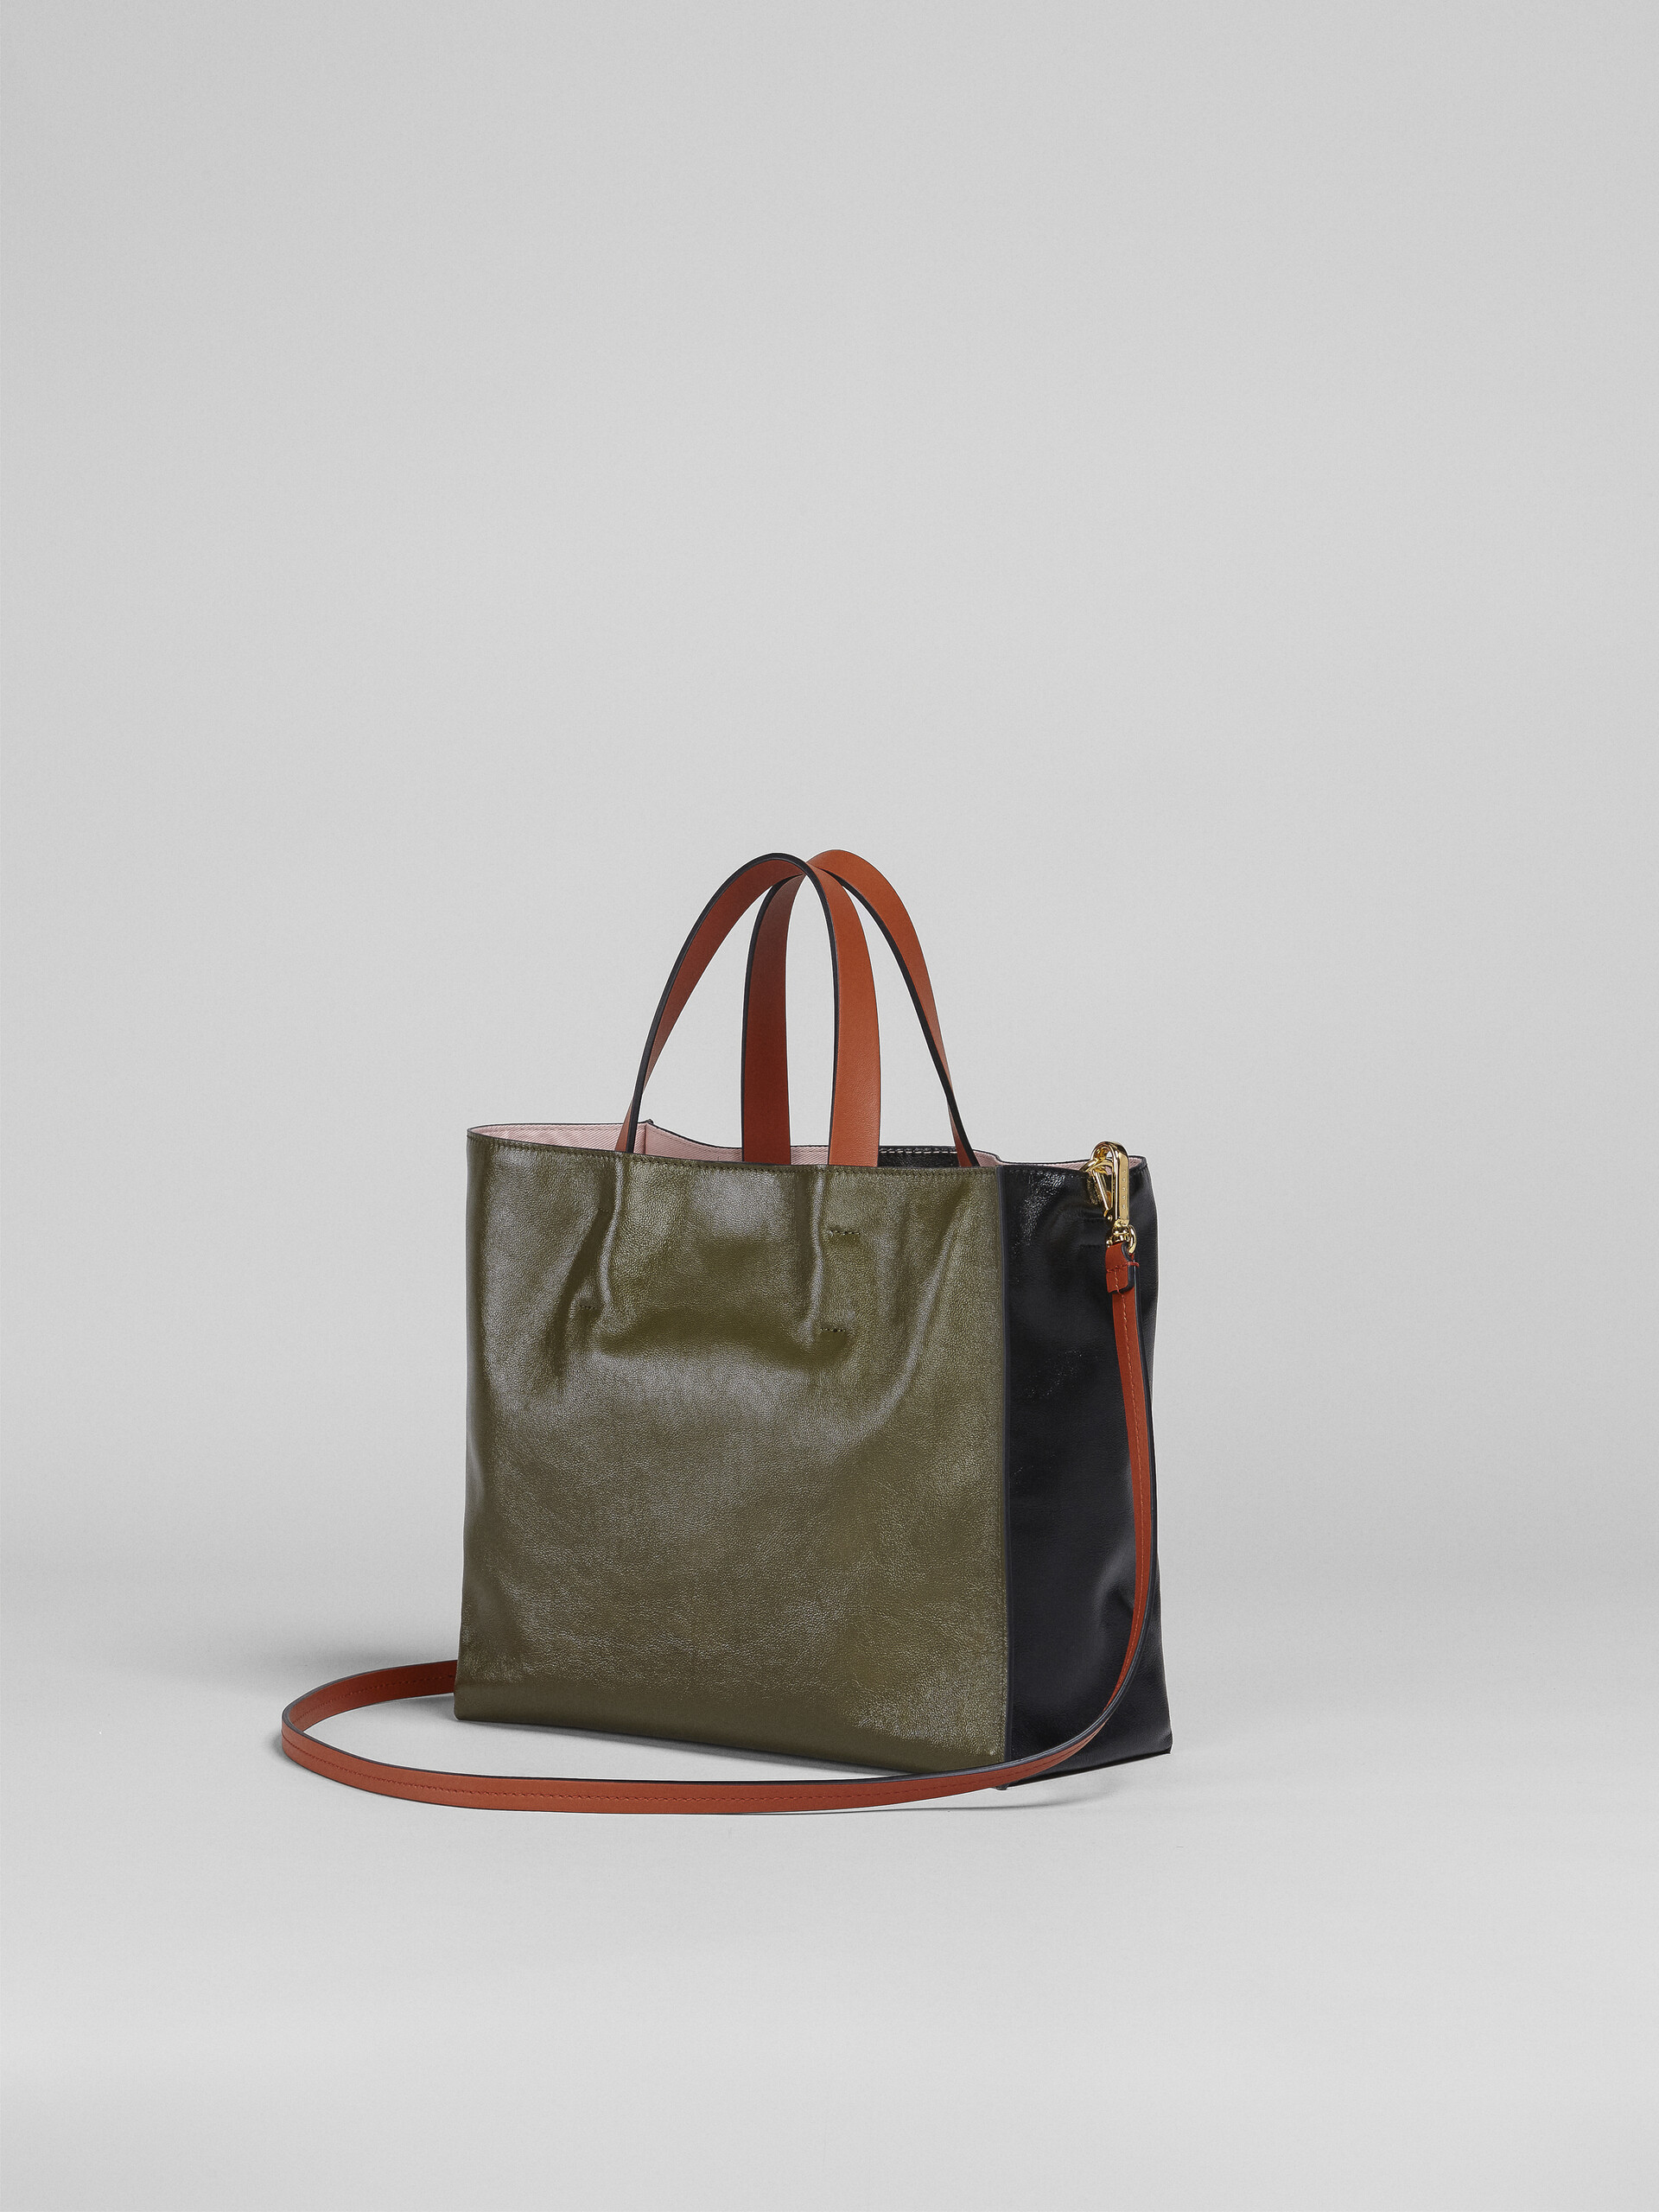 MUSEO SOFT bag piccola in pelle nera verde e arancio - Borse shopping - Image 3